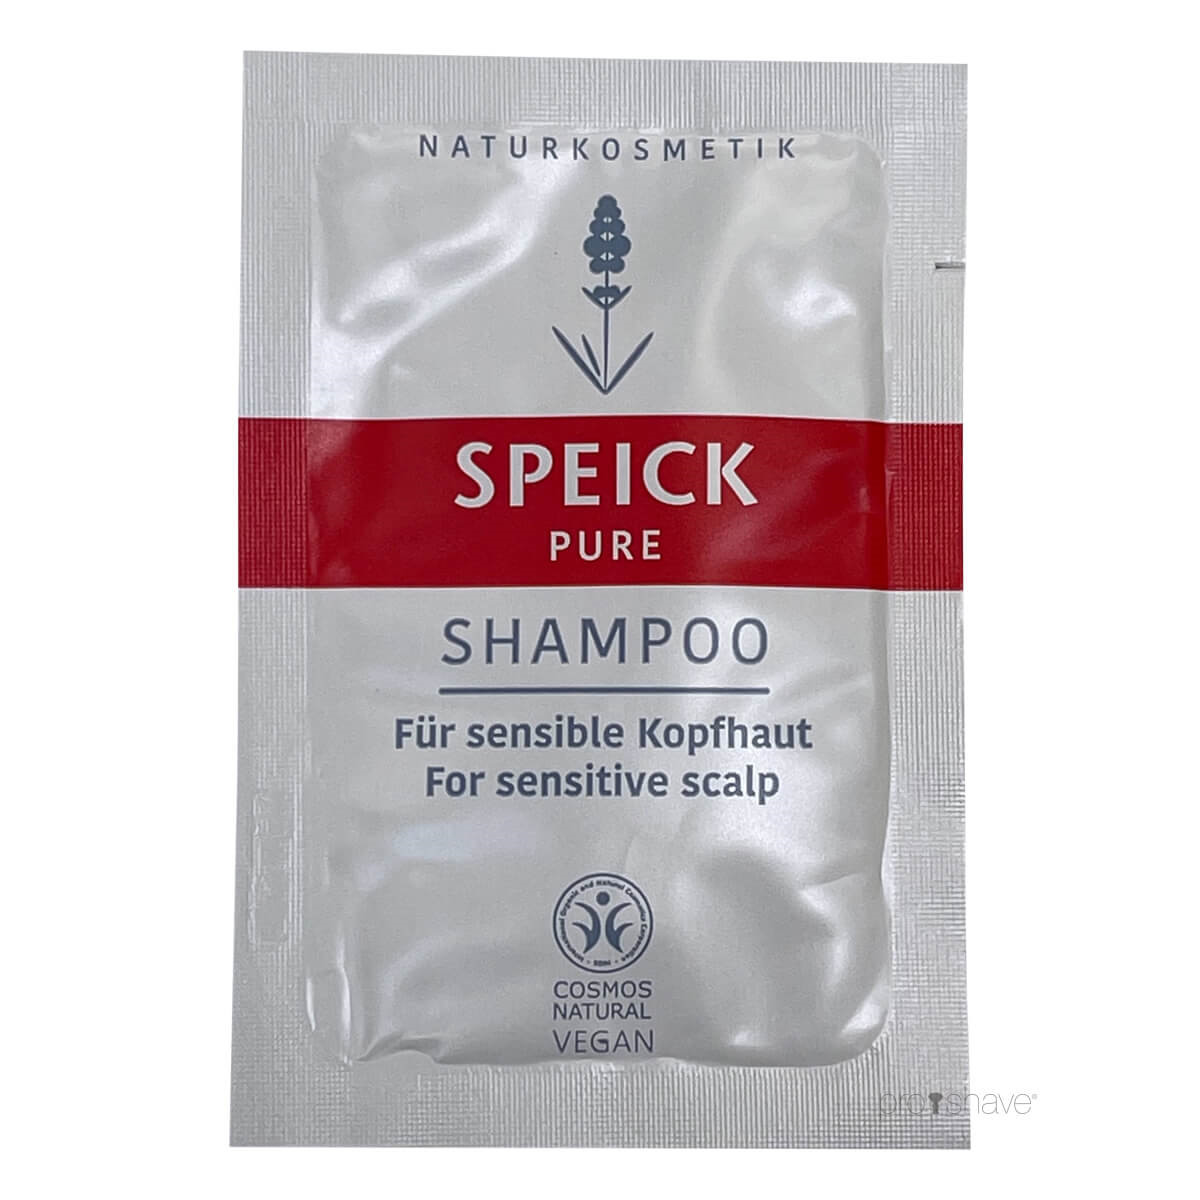 Speick Pure Shampoo, Sample, 6 ml.